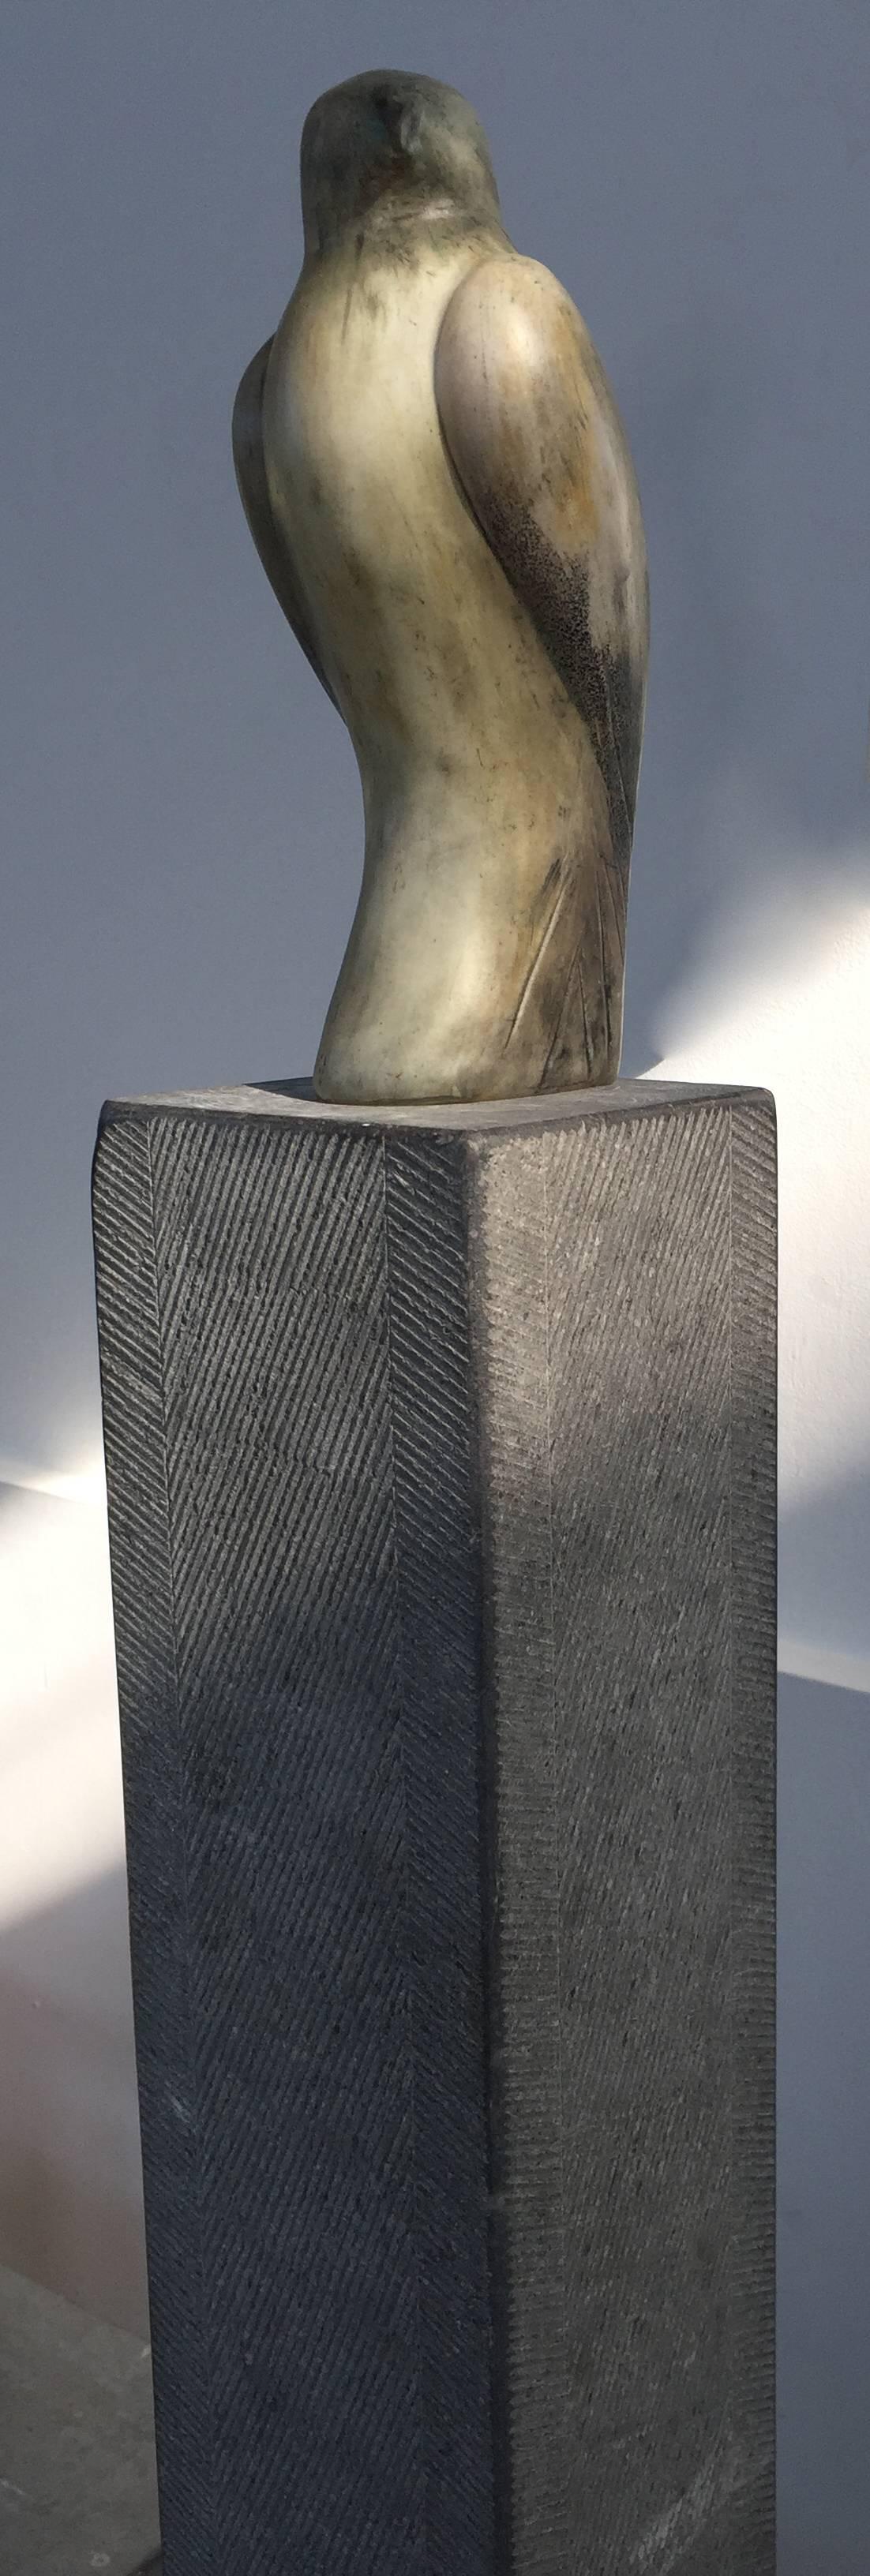 Egyptian Gyrfalcon - Sculpture by Jane Rosen